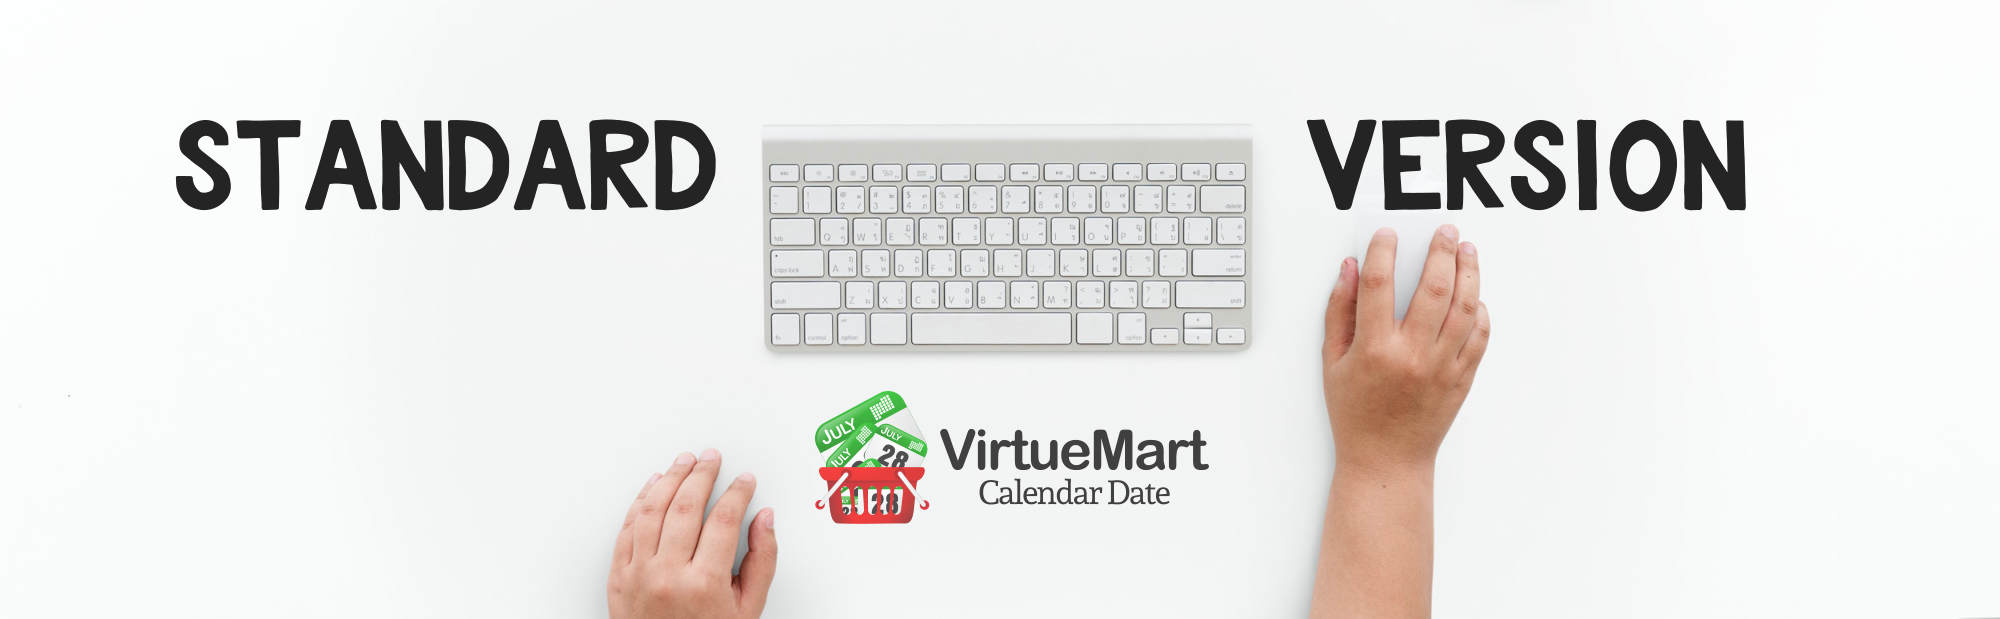 virtuemart calendar plugin standard